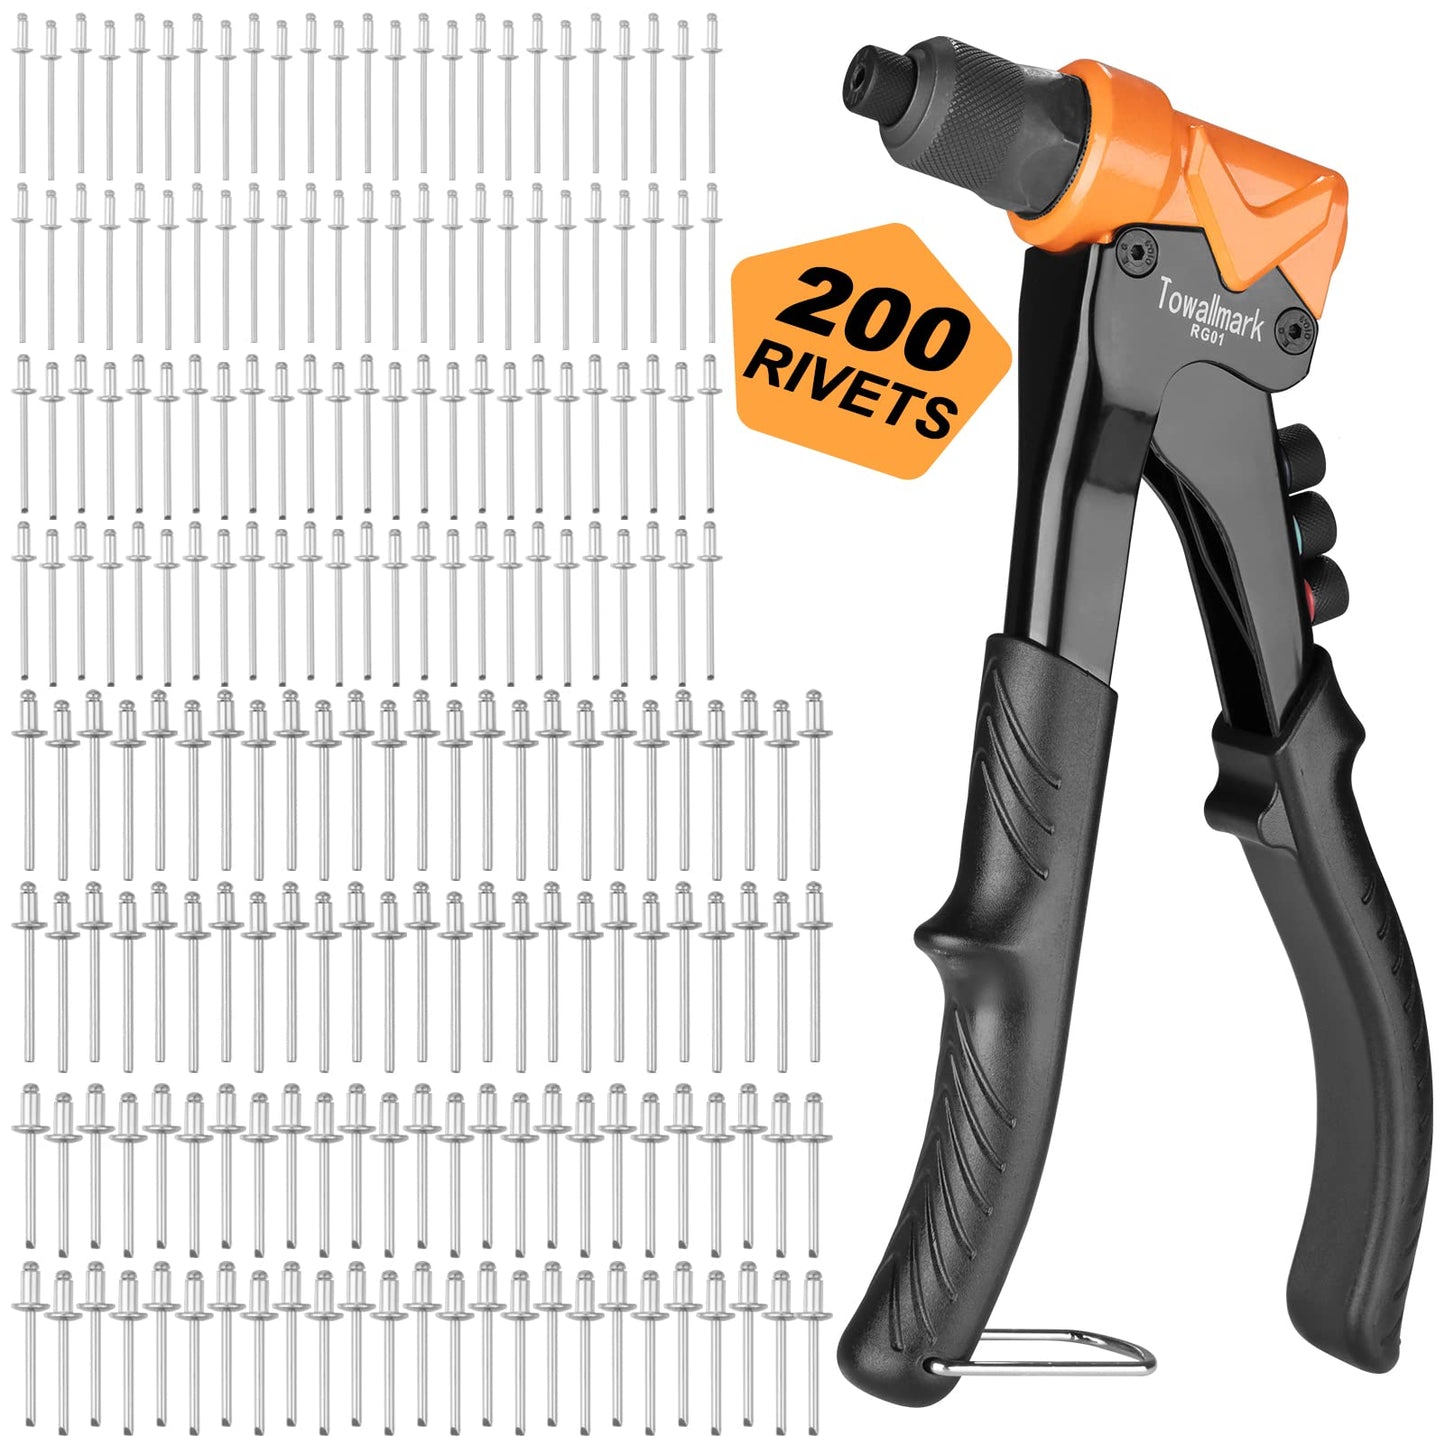 TOWALLMARK Pop Rivet Tool with 200Pcs Rivets Kit for Metal Plastic